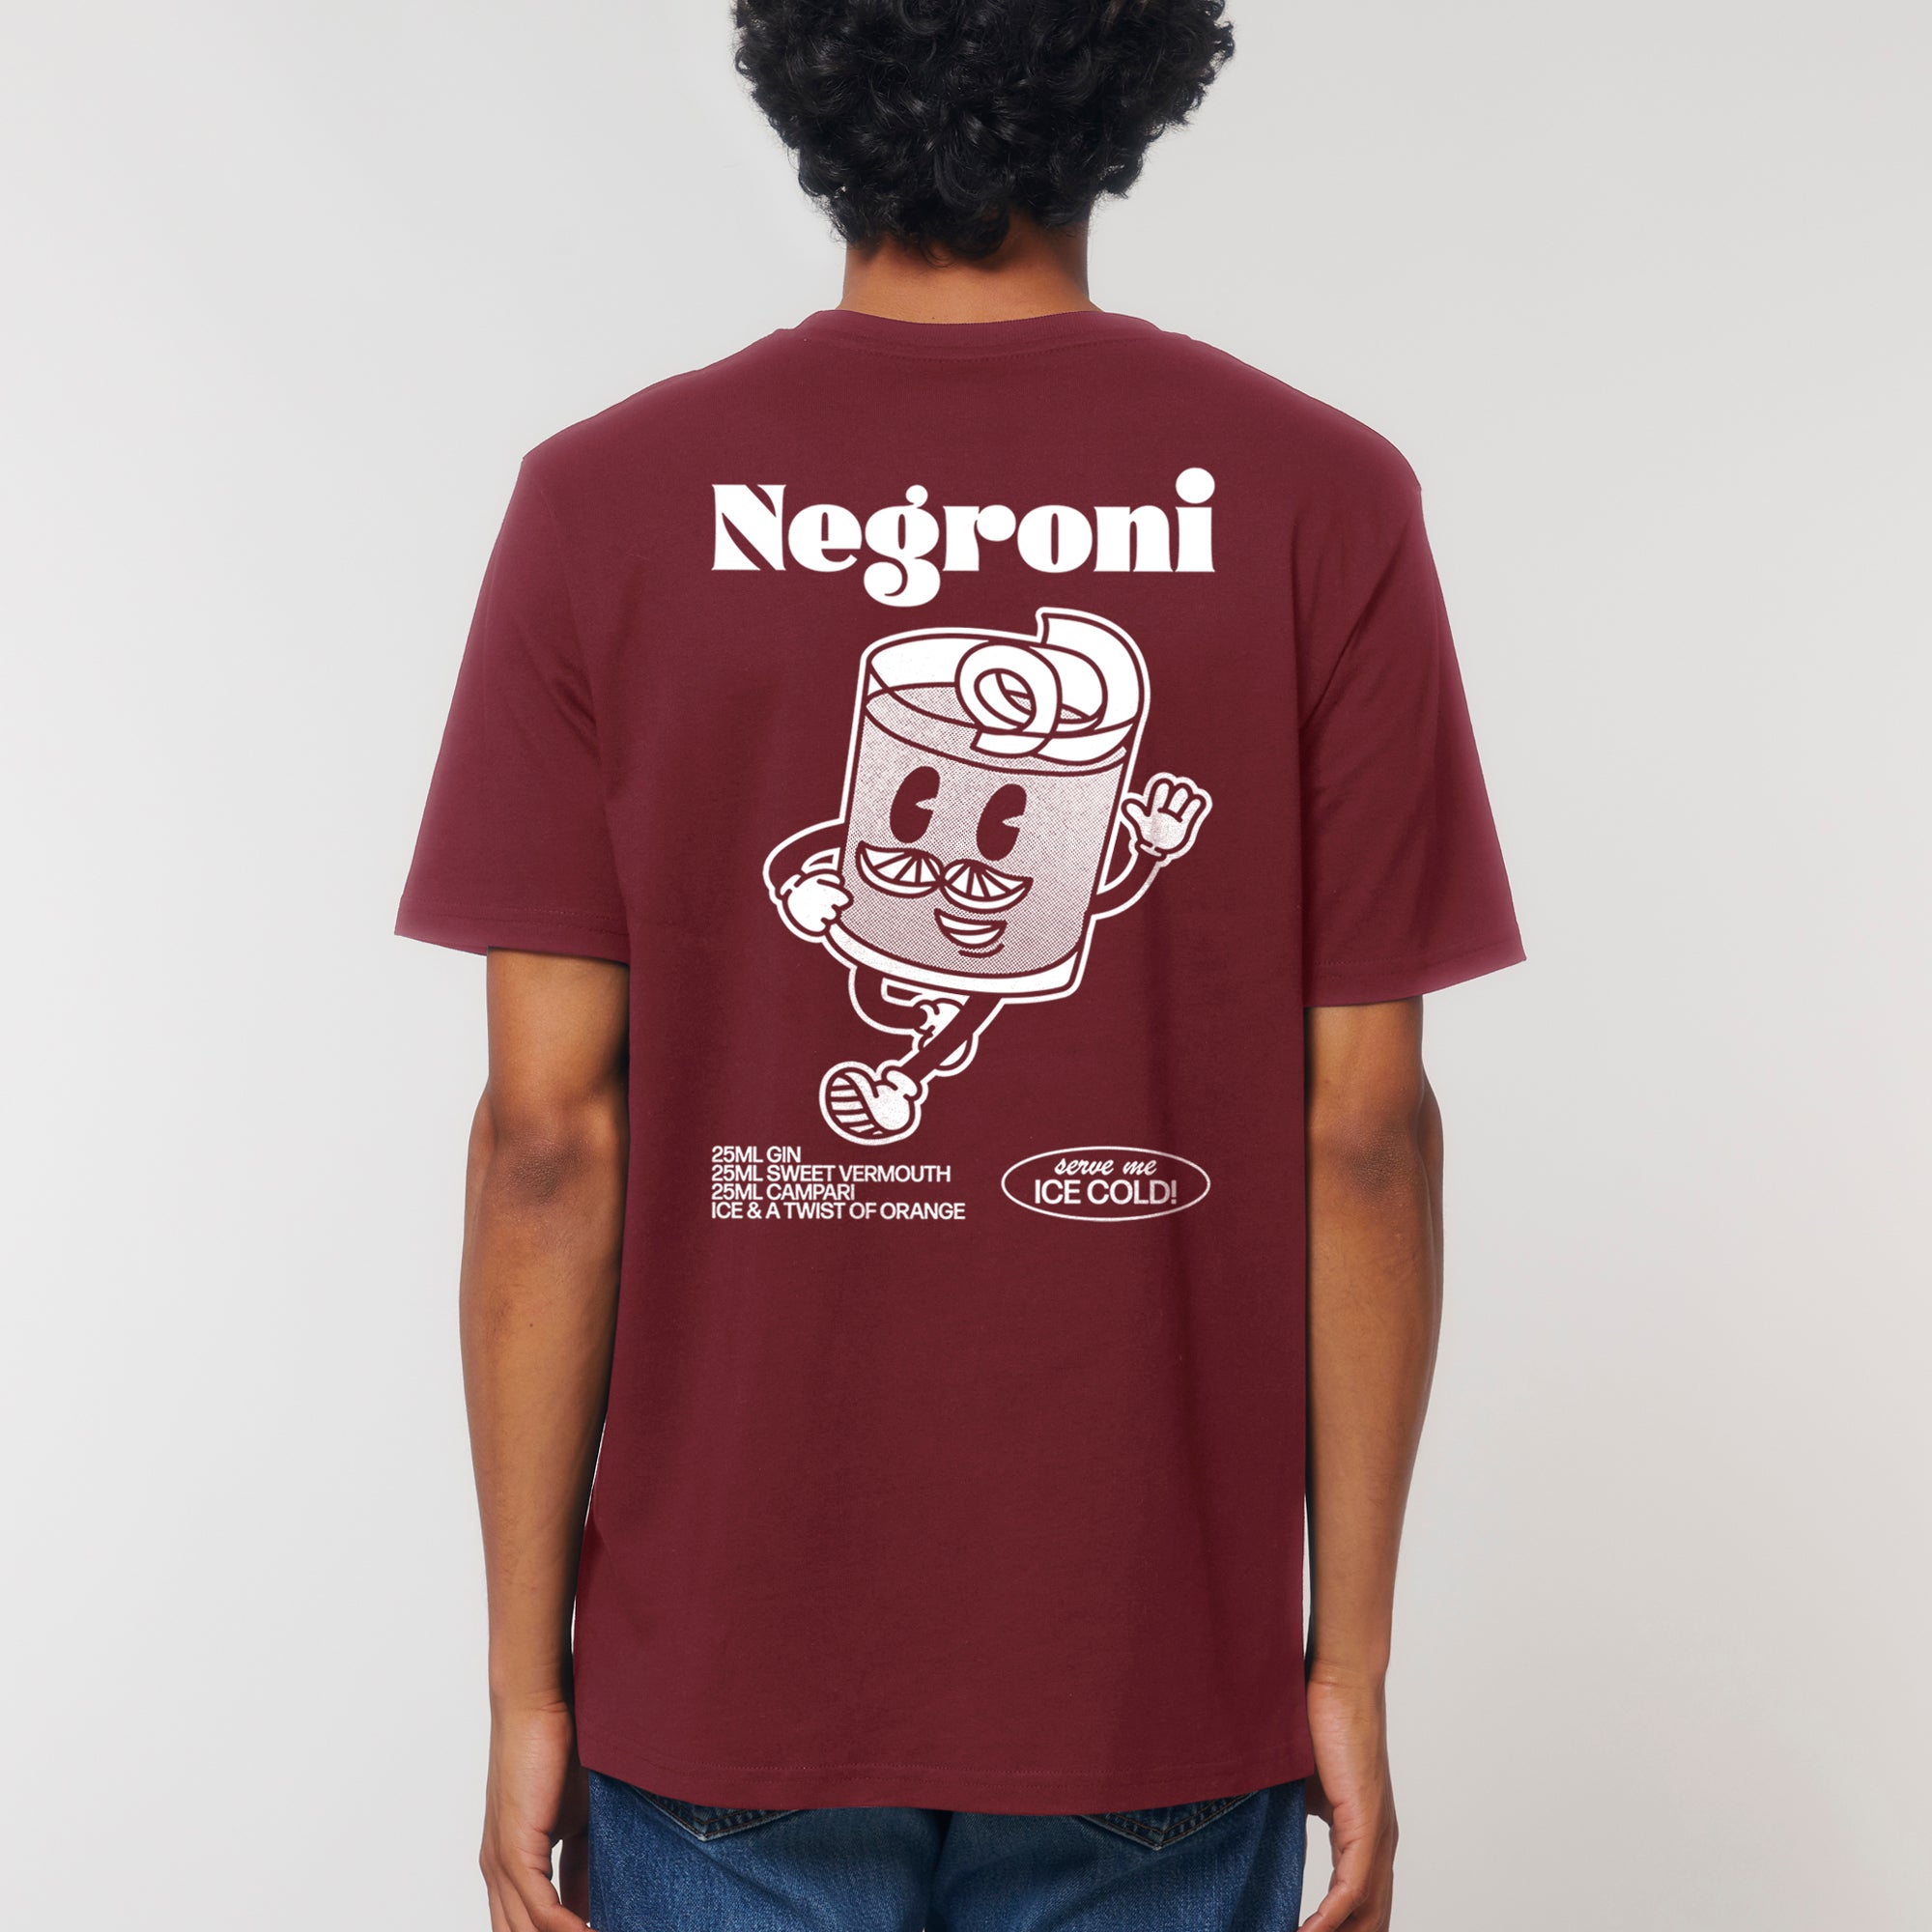 'Negroni' burgundy T-shirt